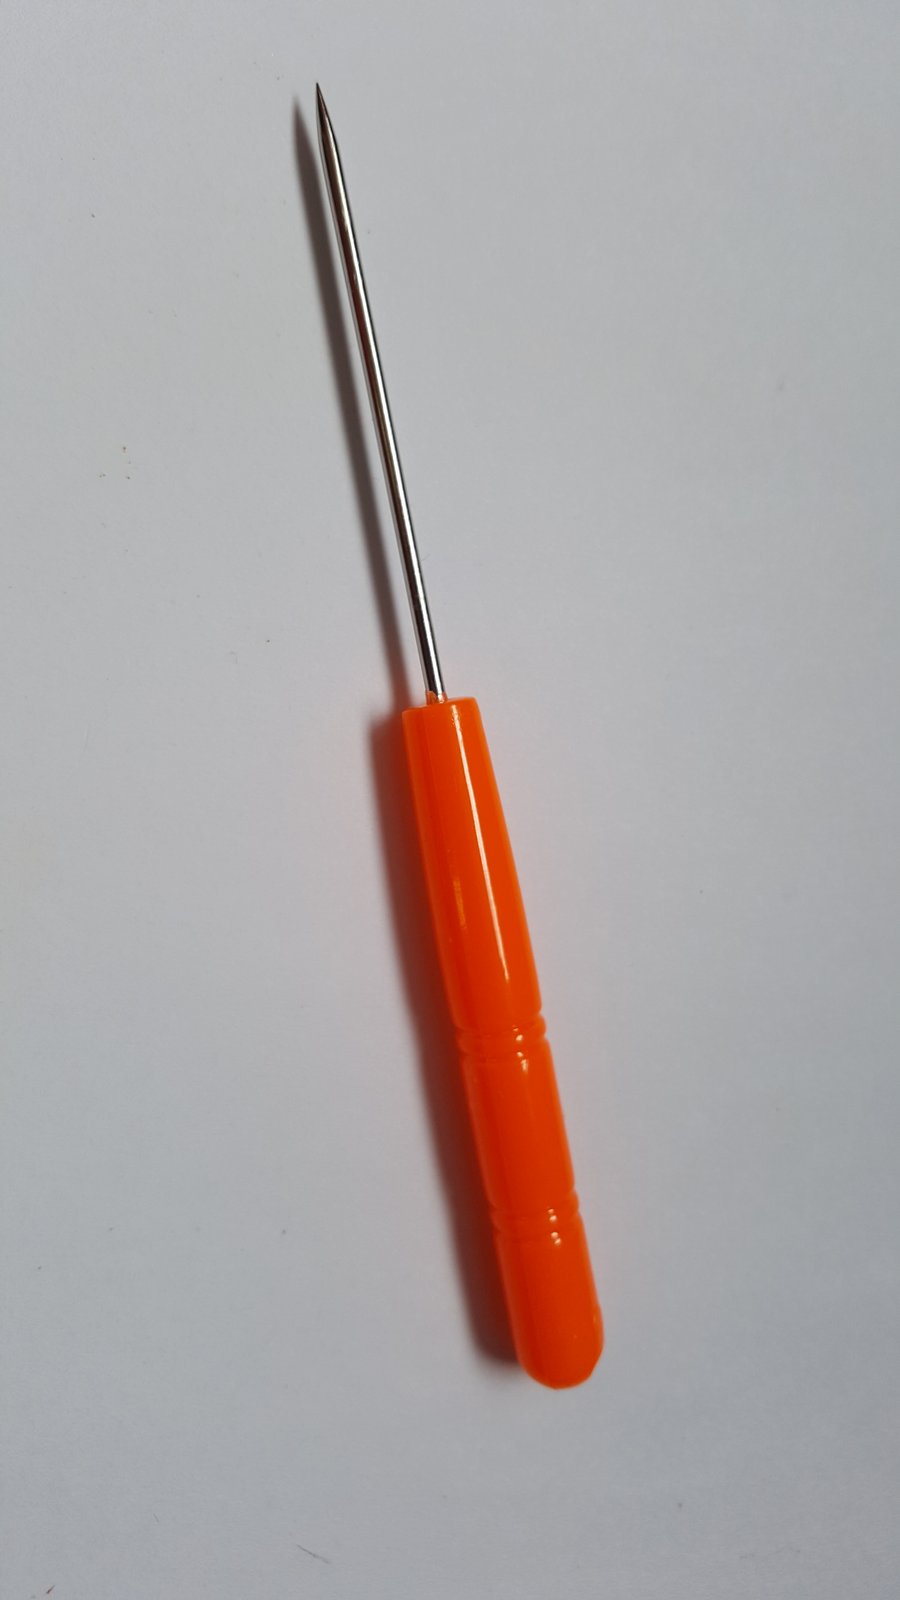 1 x Plastic Handled Awl Tool (Bead Reamer) - 2mm - Orange